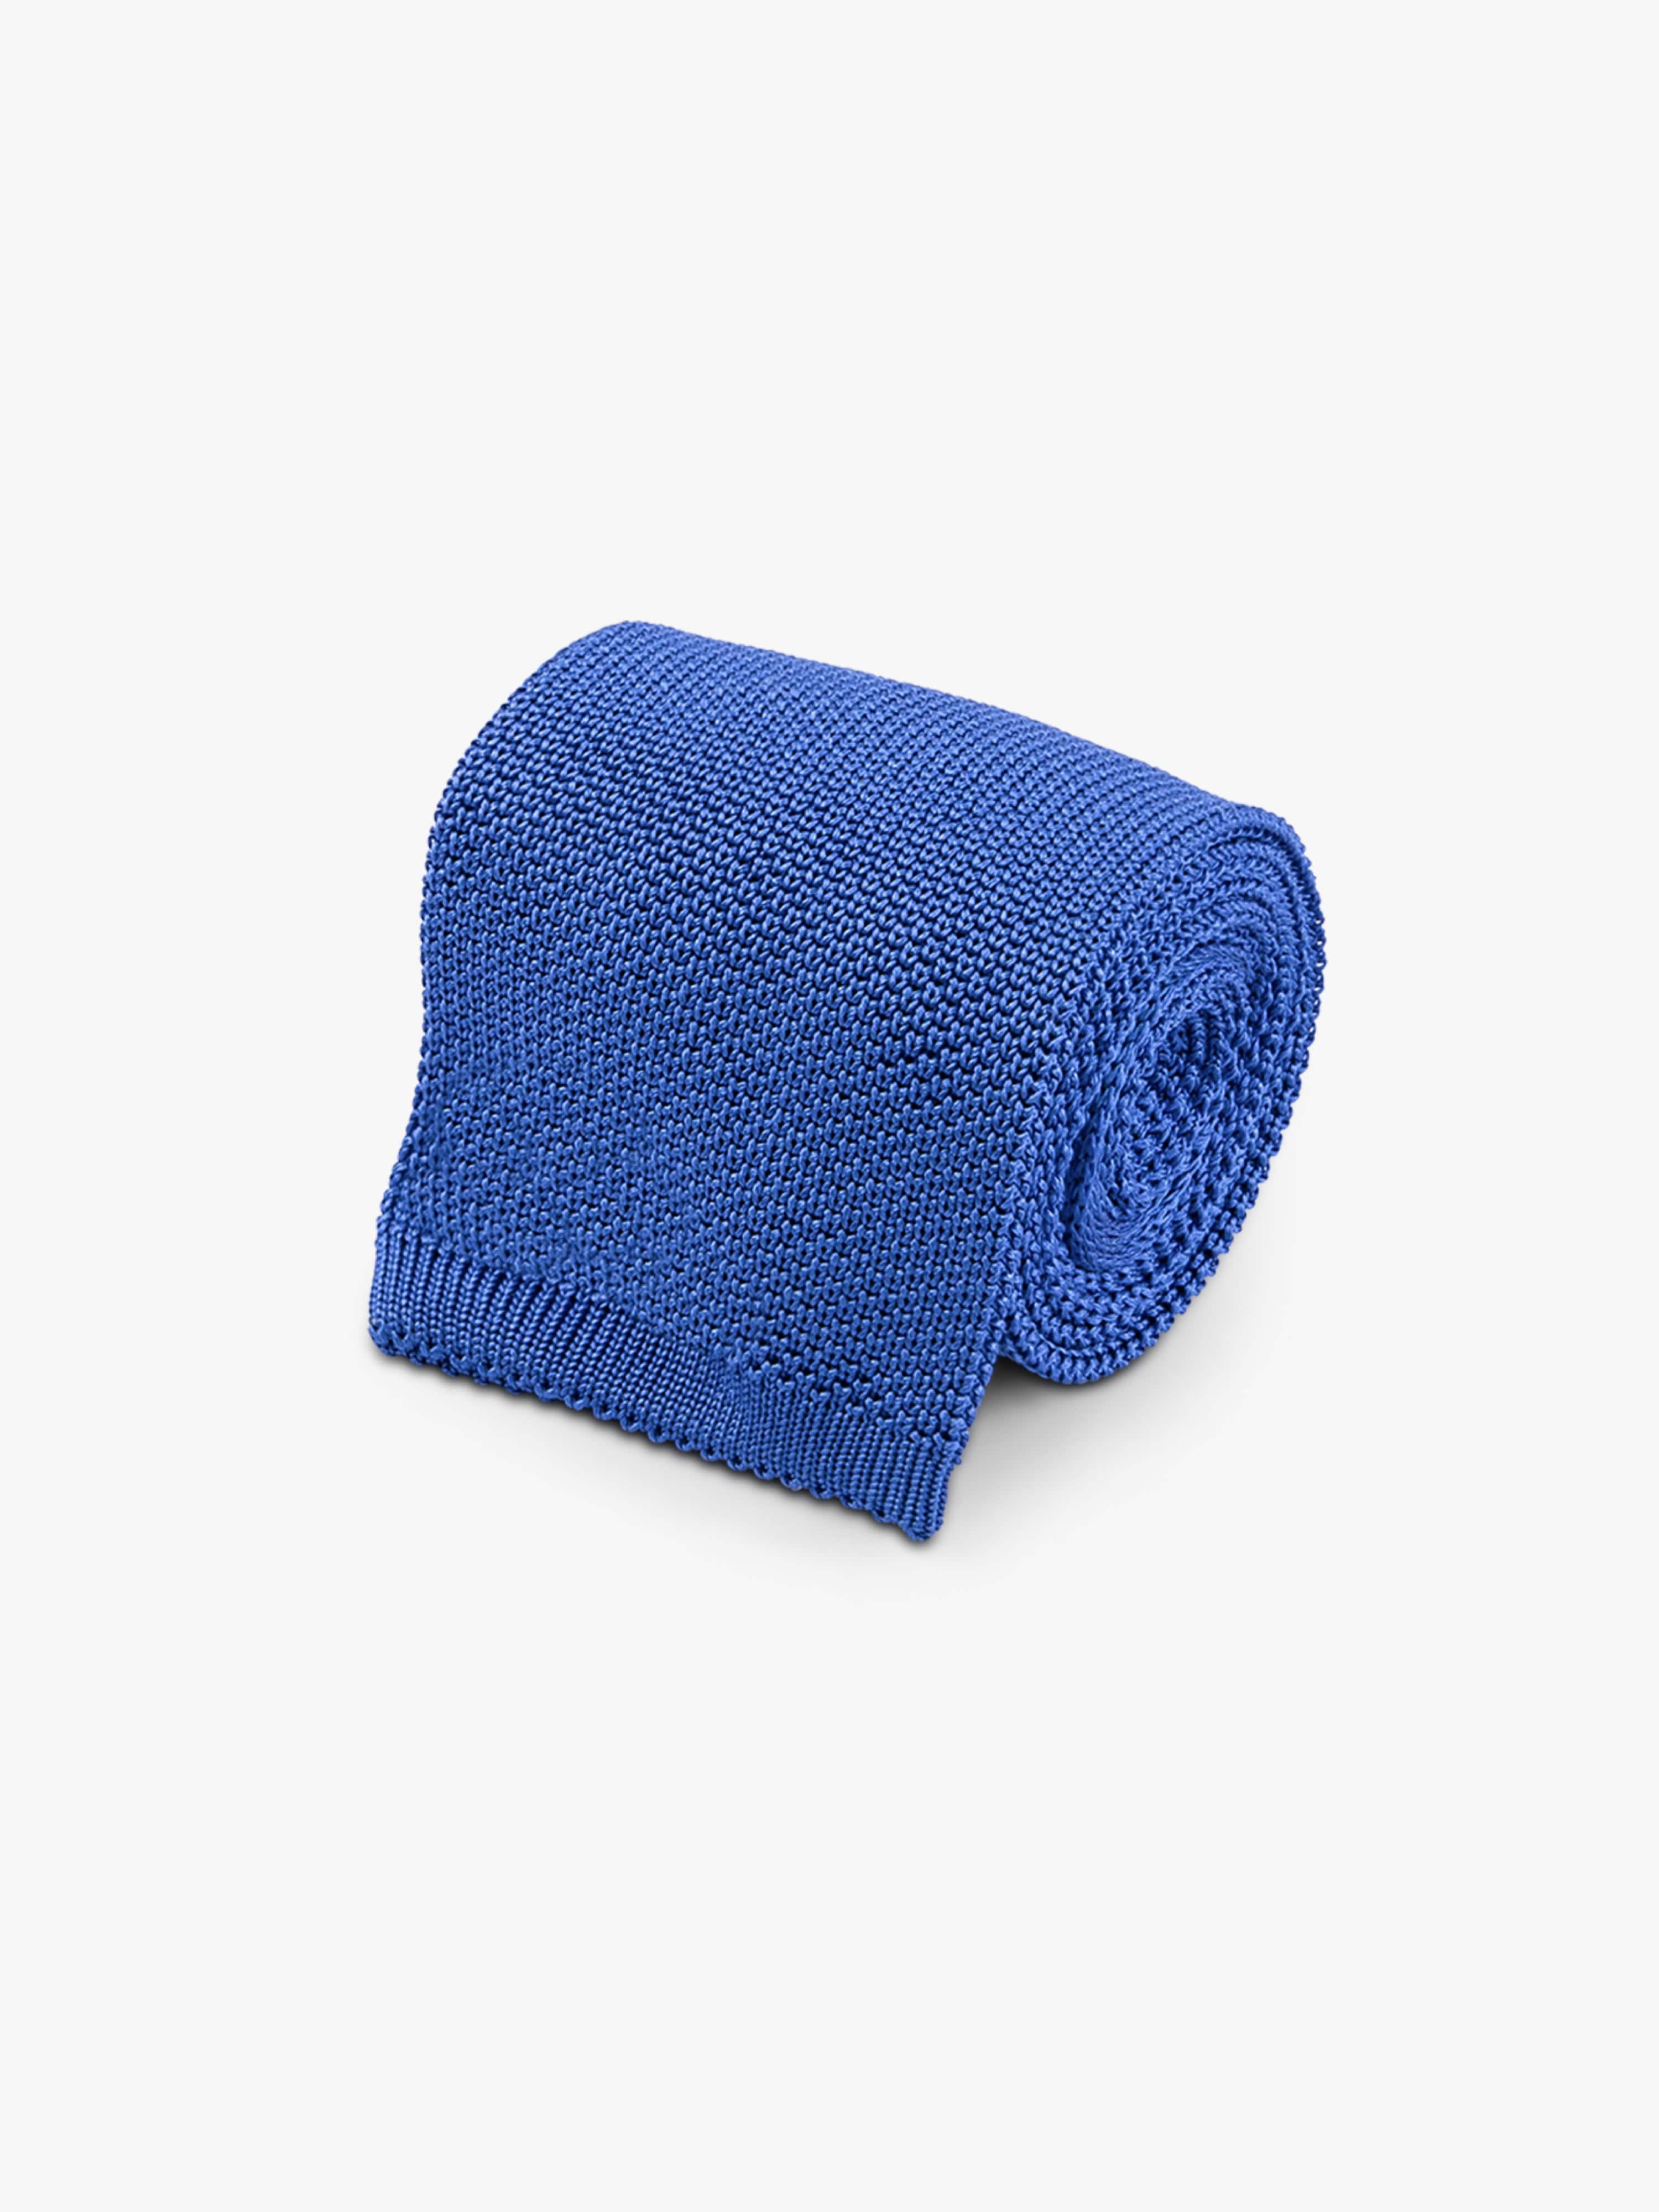 Vibrant Blue Knit Tie - Grand Le Mar